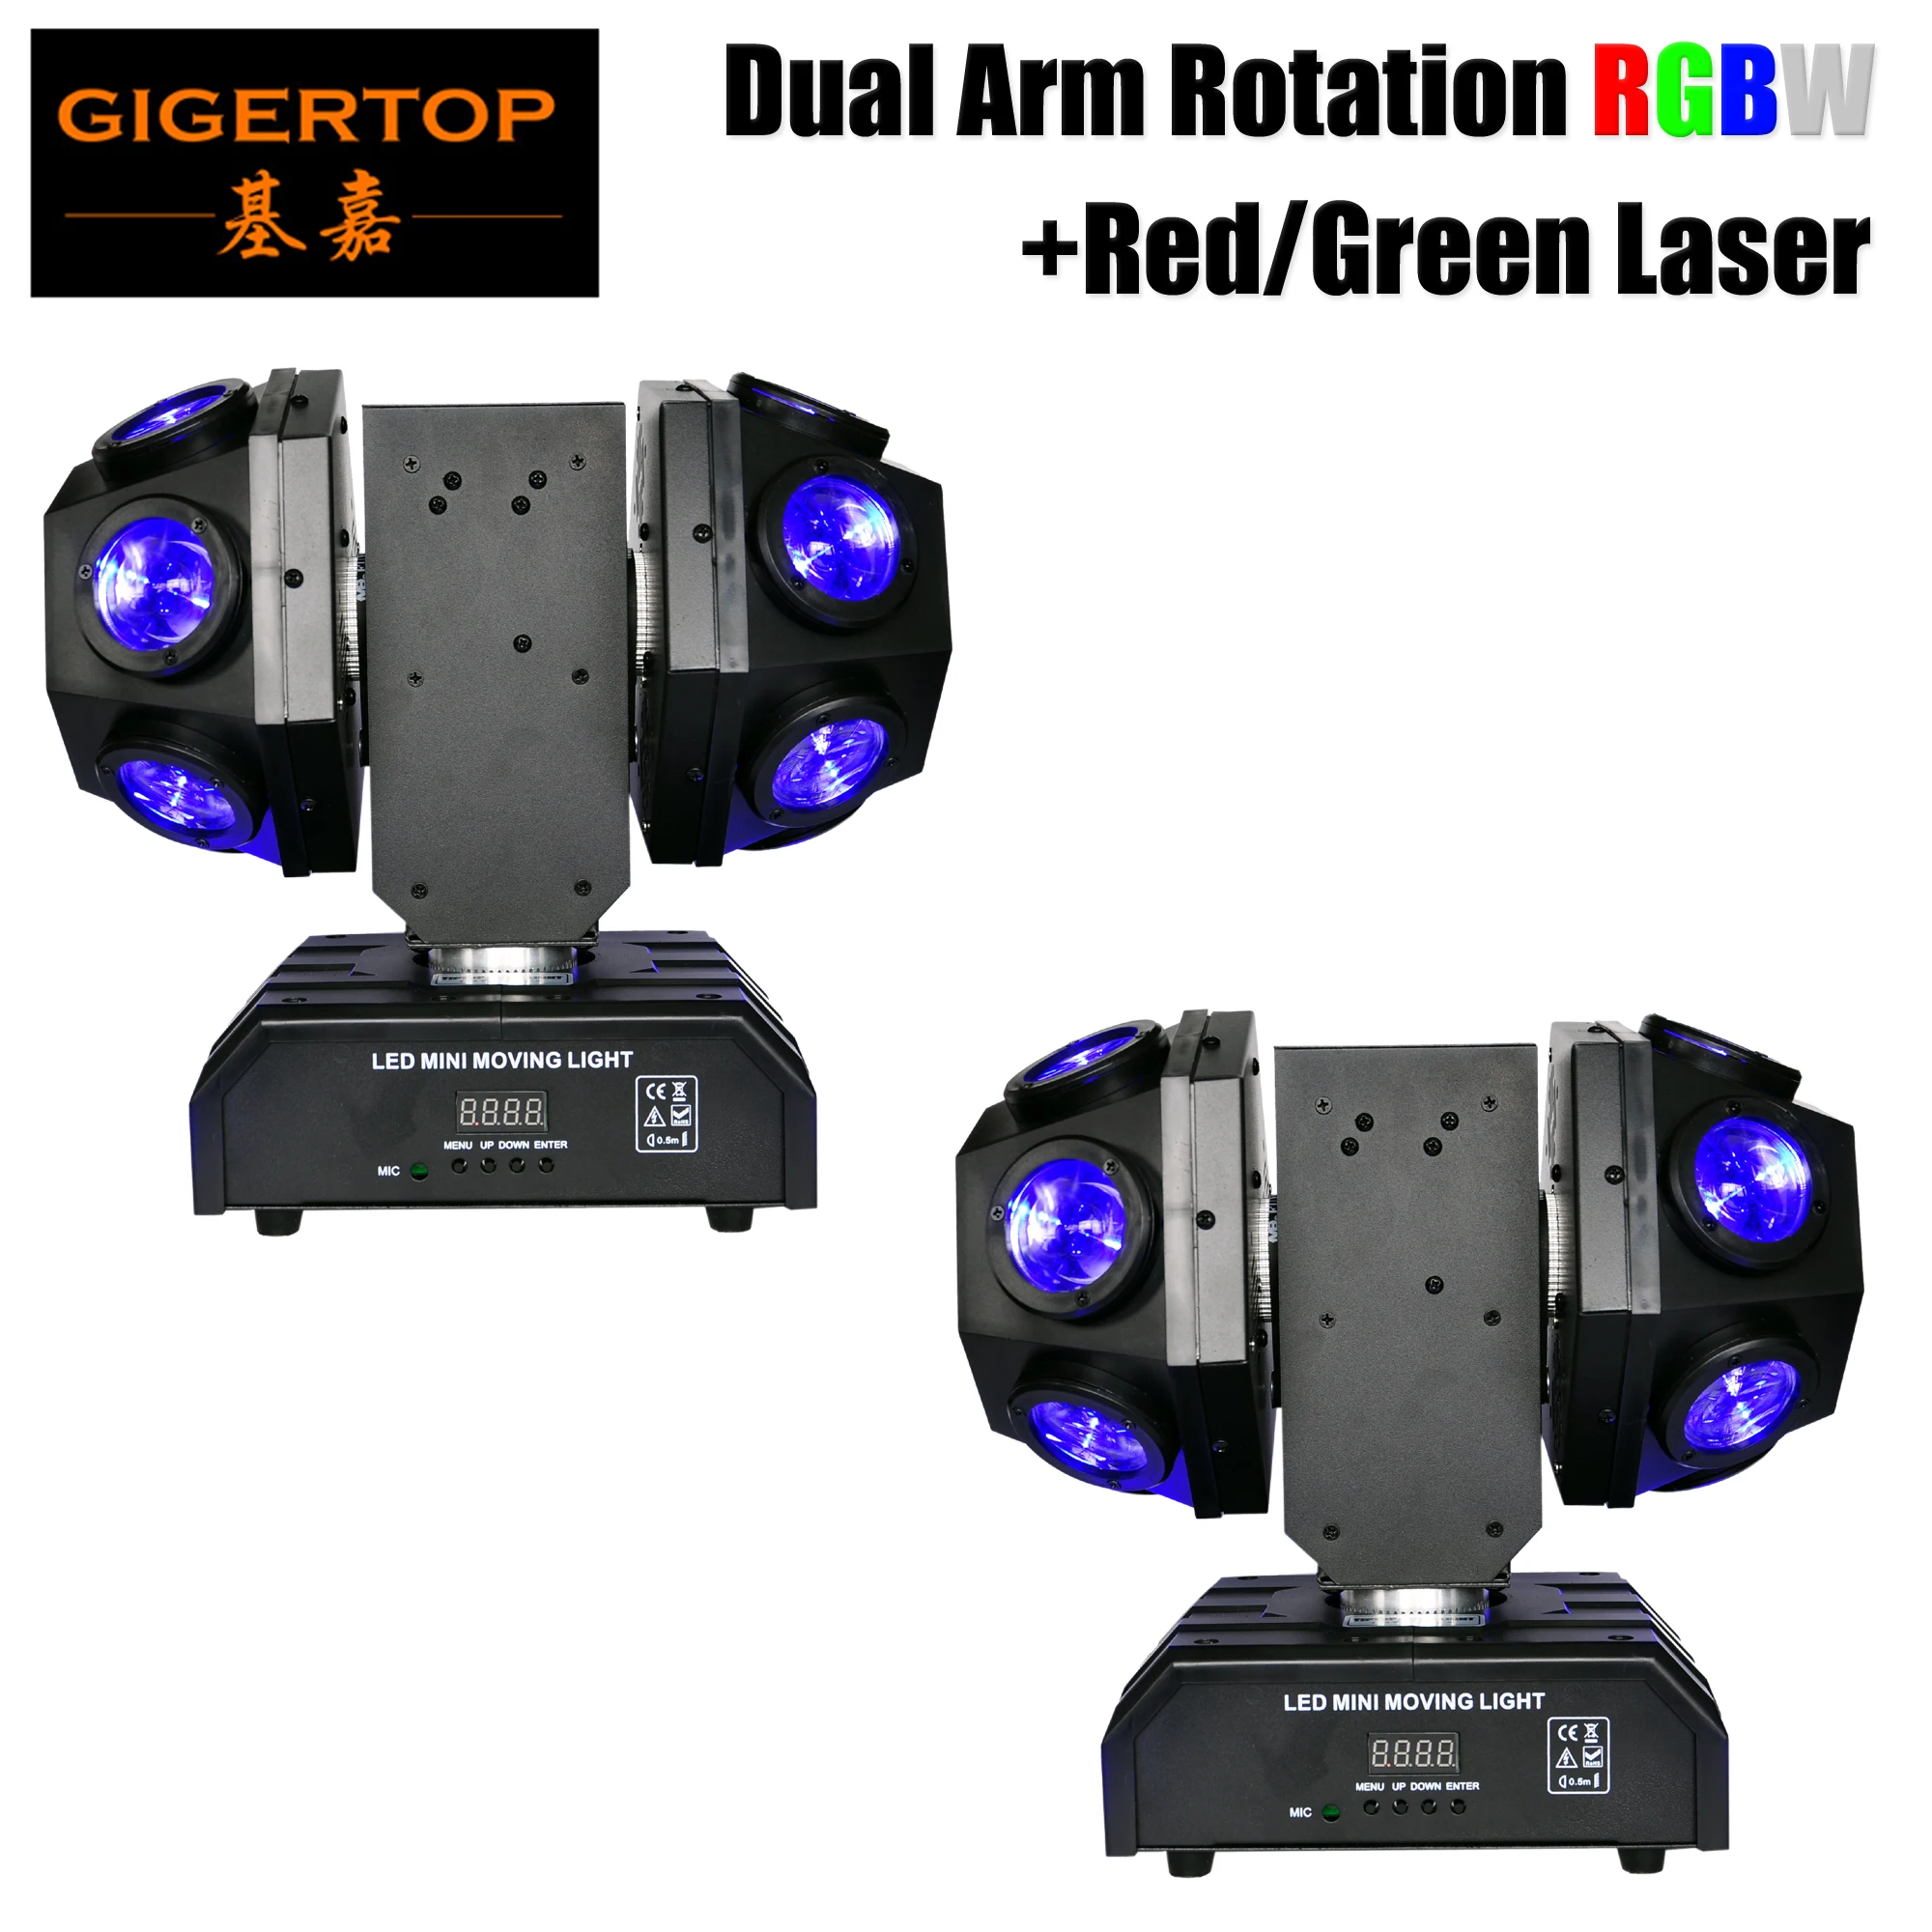 

Gigertop TP-L683 12x10W RGBW Dual Arm Endless Rotation Mini Led Moving Head Light Red Green Laer 17/20 DMX Channels Super Beam